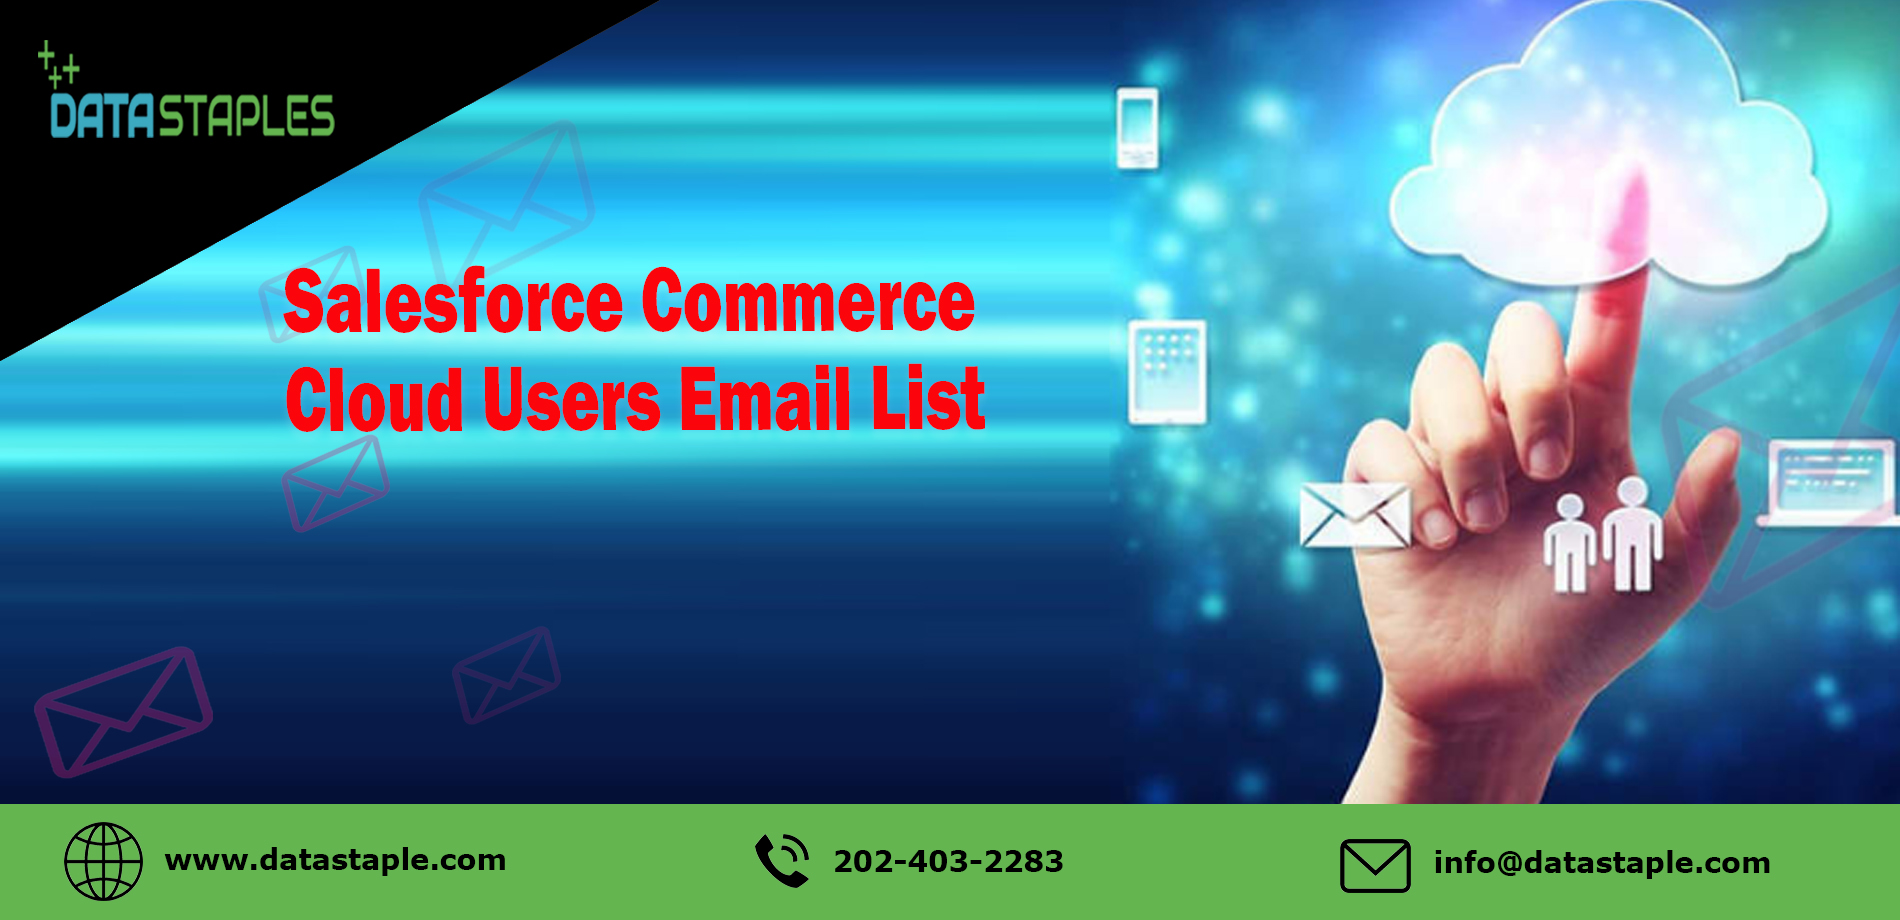 Salesforce Commerce Cloud Users Email List | DataStaples